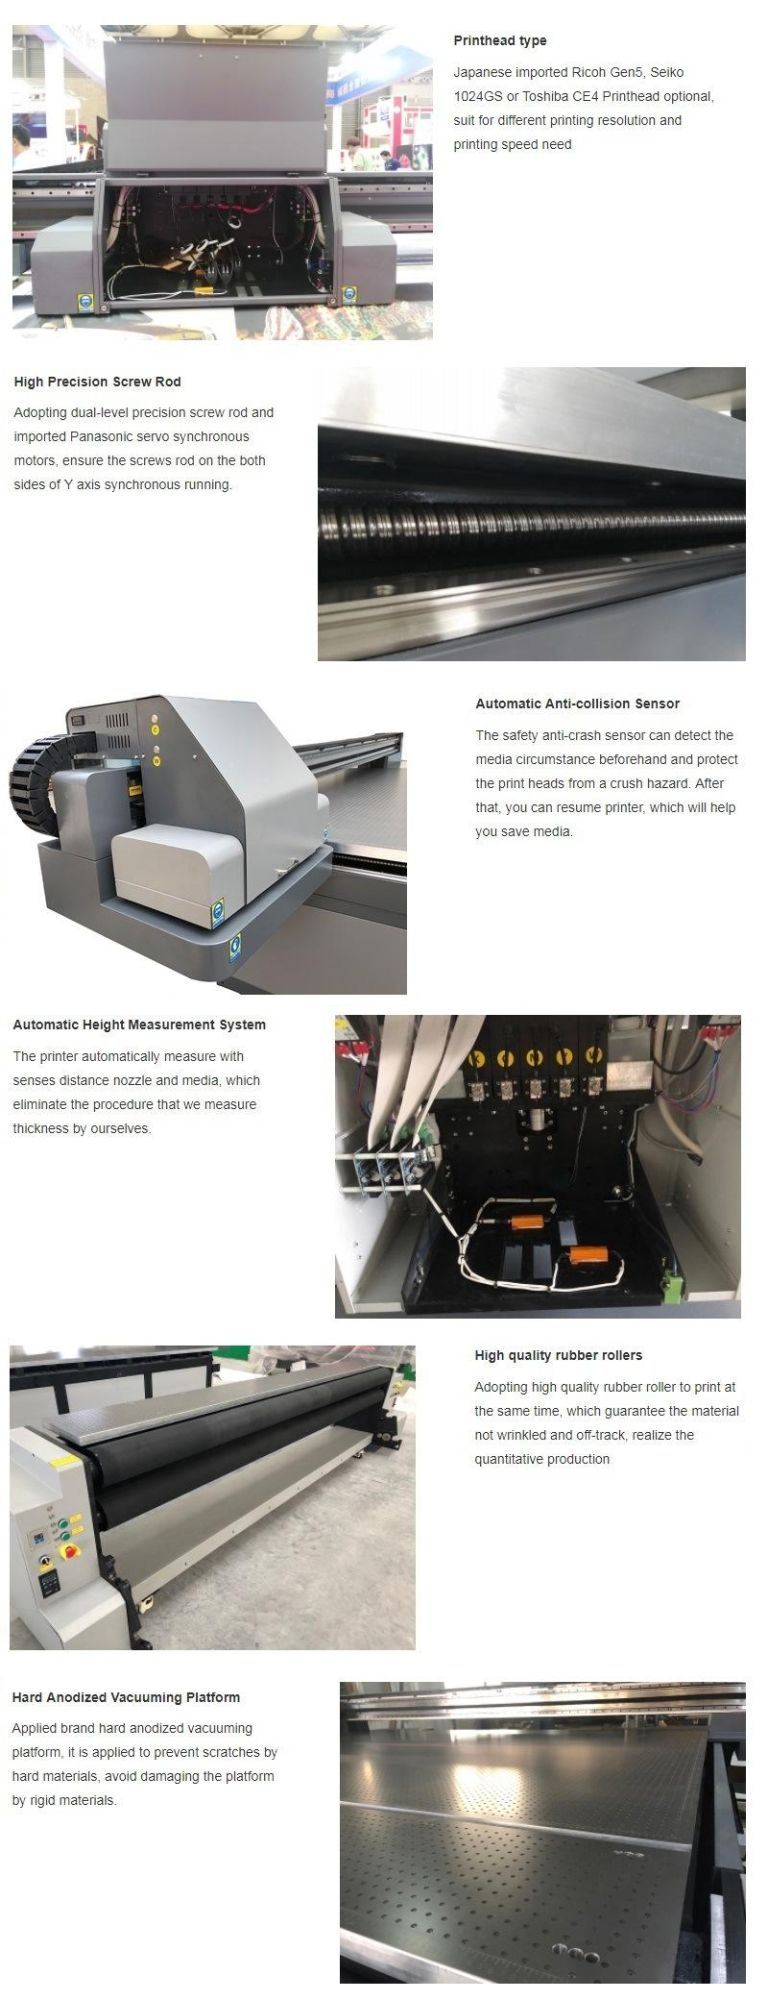 Ntek 3321r Digital Printing Machine Hybrid MDF UV Flatbed Printer